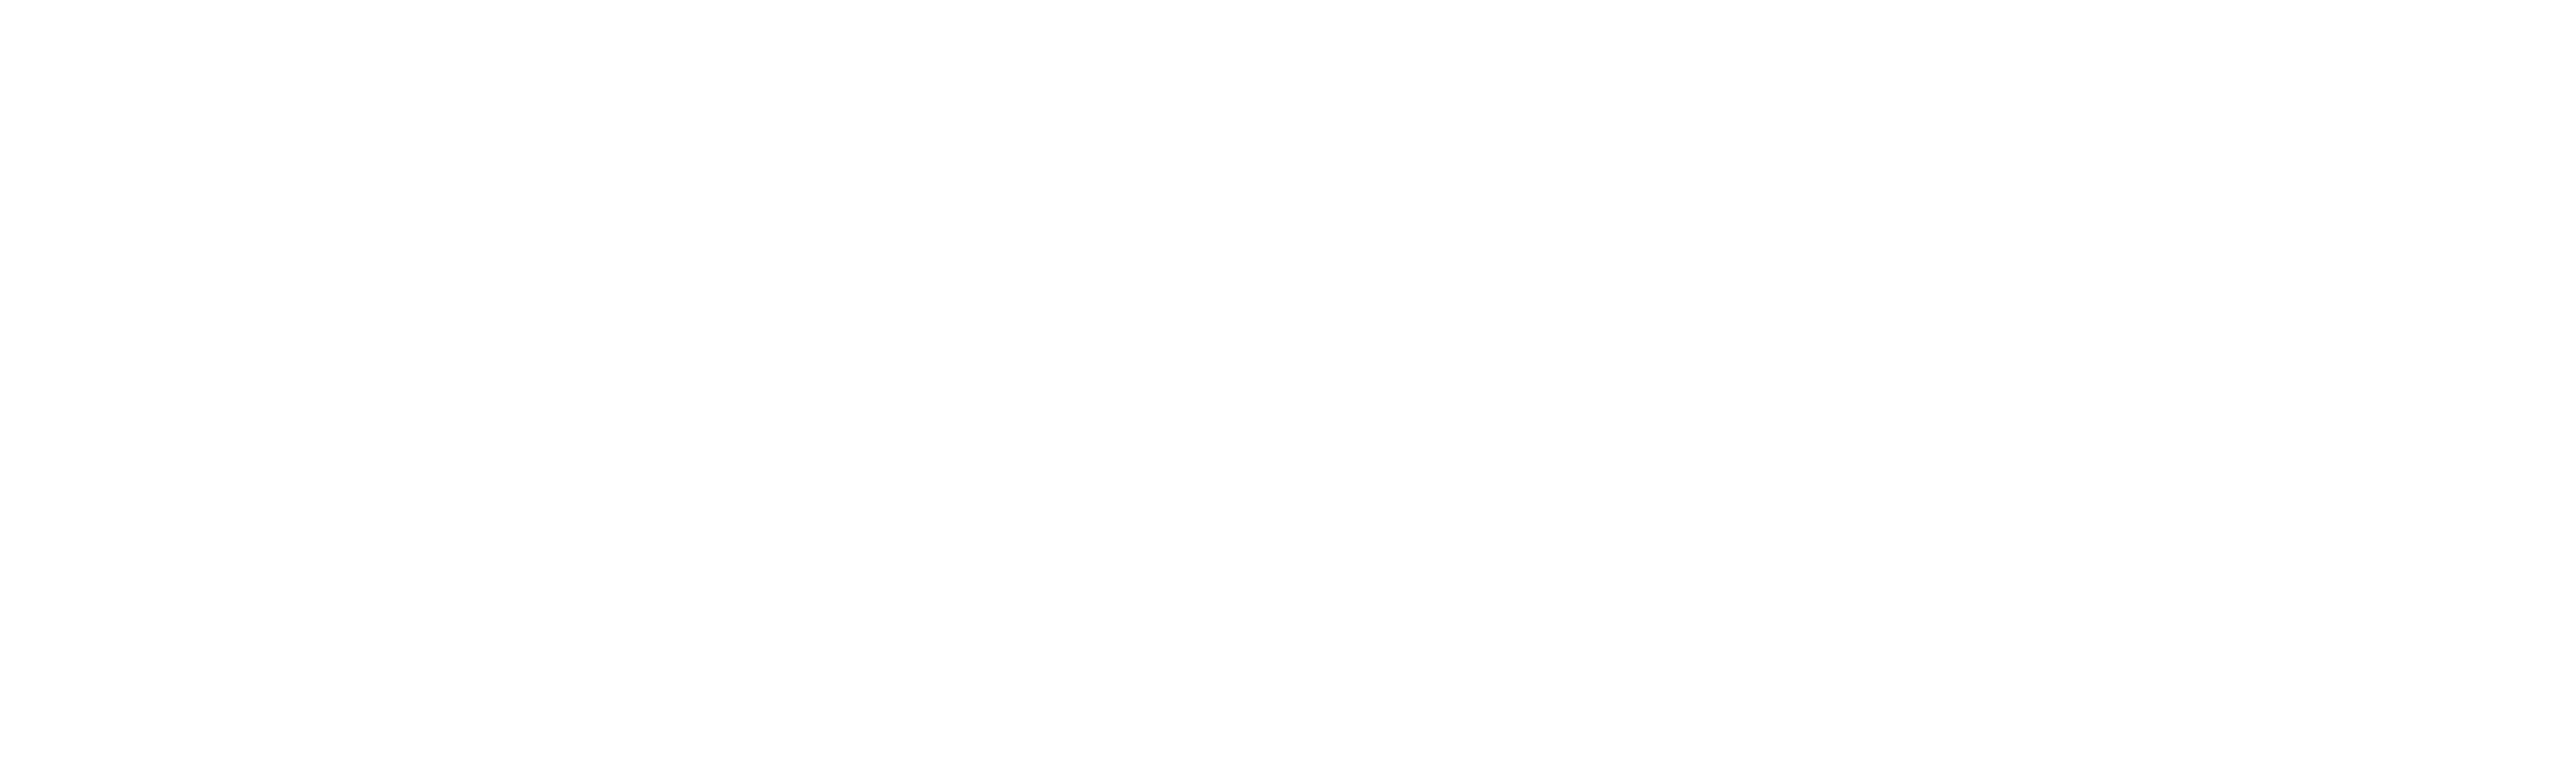 thatchers careers logo